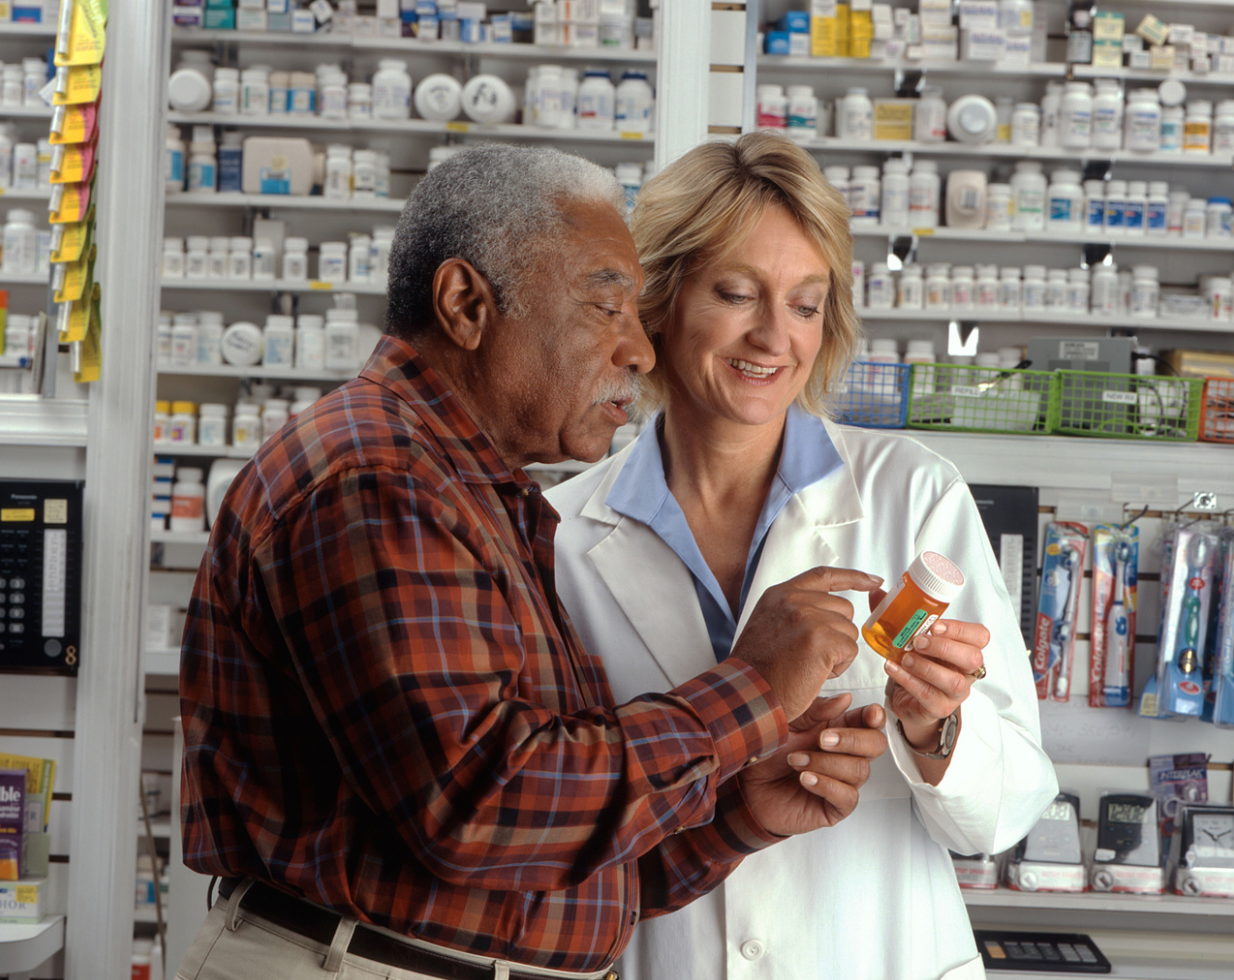 Pharmacist-Based Deprescribing Reduced Prescription, Cumulative Use of High-Risk Drugs in Older Adults